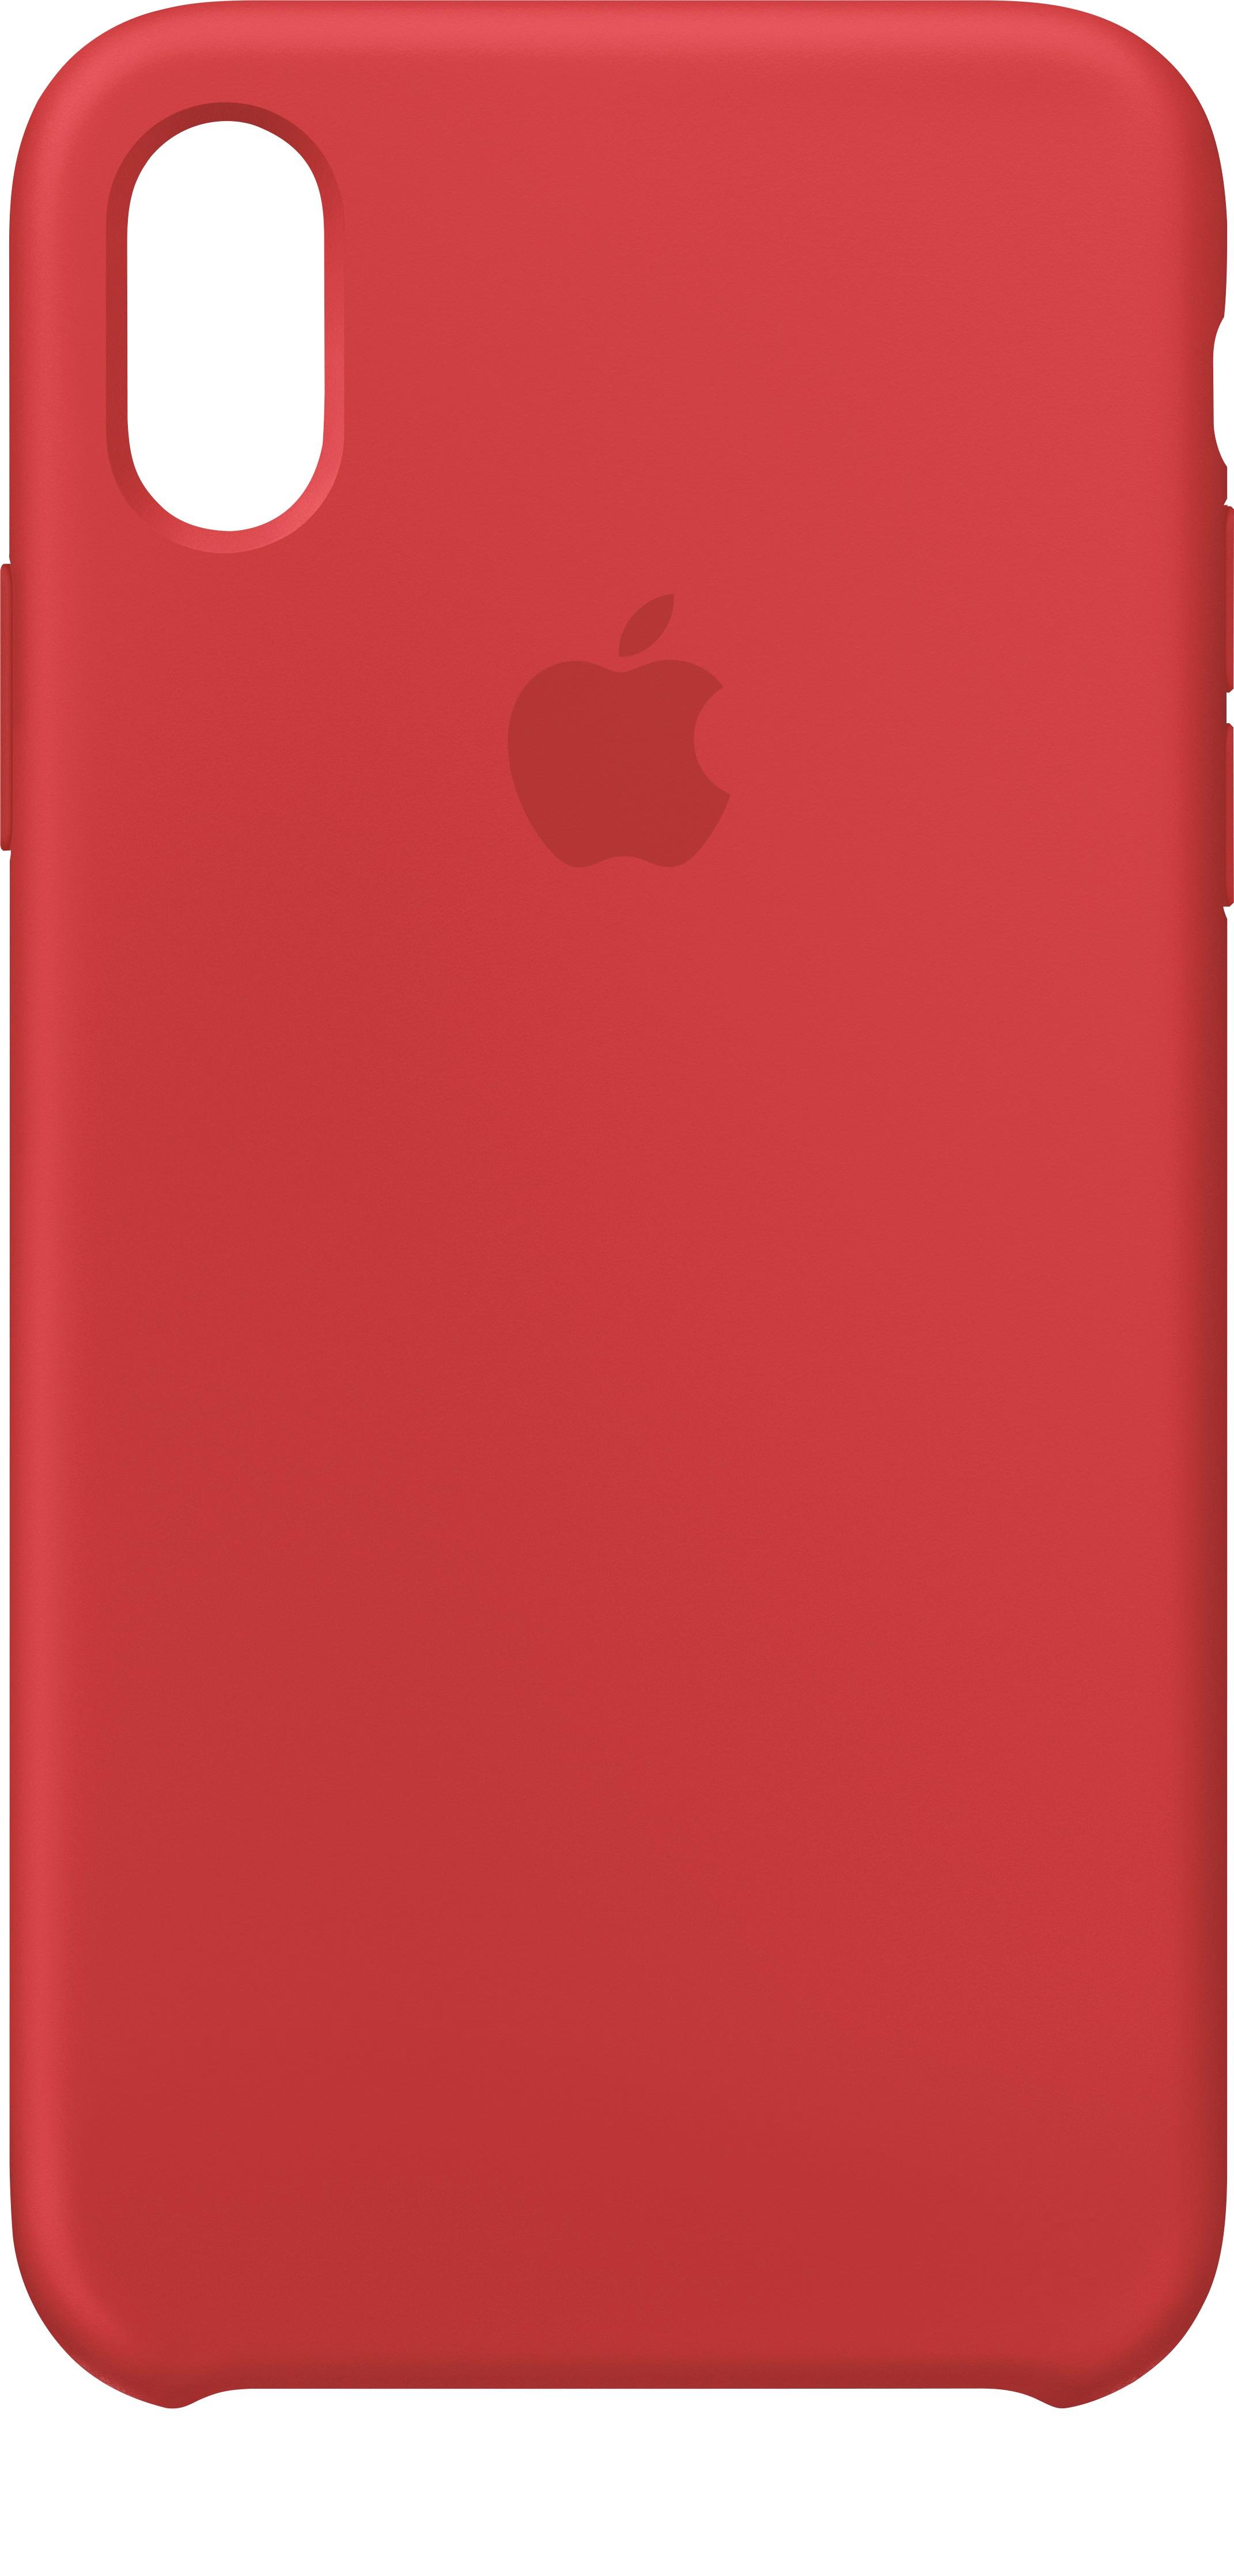 Antagelse Allergi lørdag Best Buy: Apple iPhone® X Silicone Case (PRODUCT)RED MQT52ZM/A